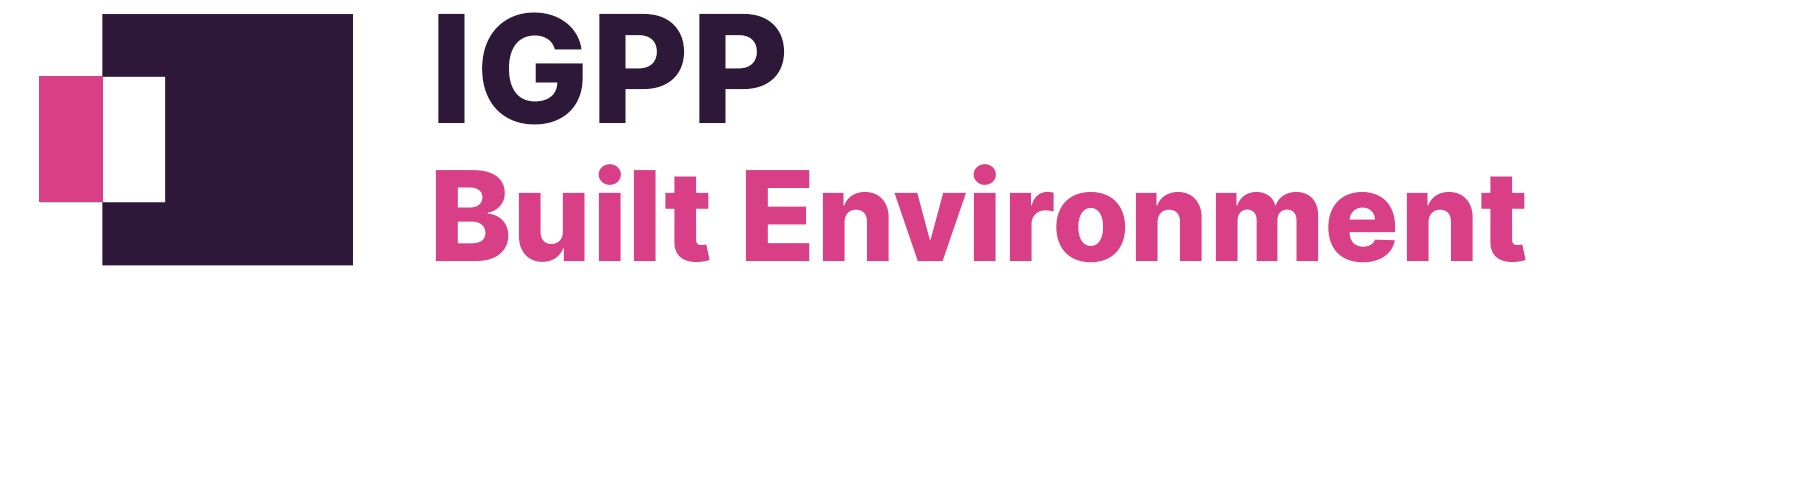 IGPP built environment sub brand logo